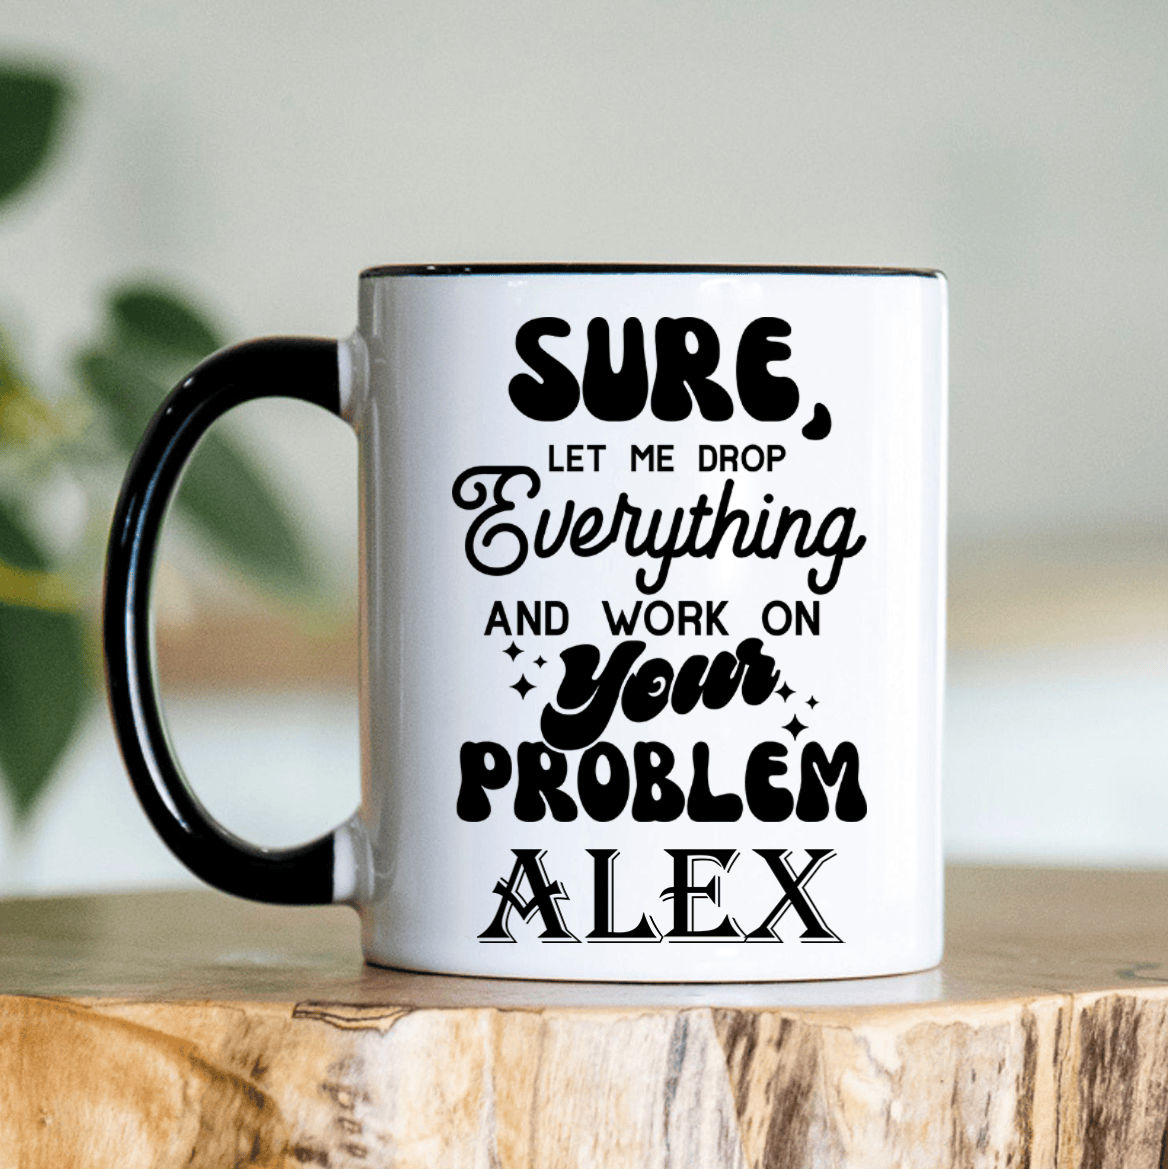 Black Funny Coffee Mug With Sounds Like Your Problem Design